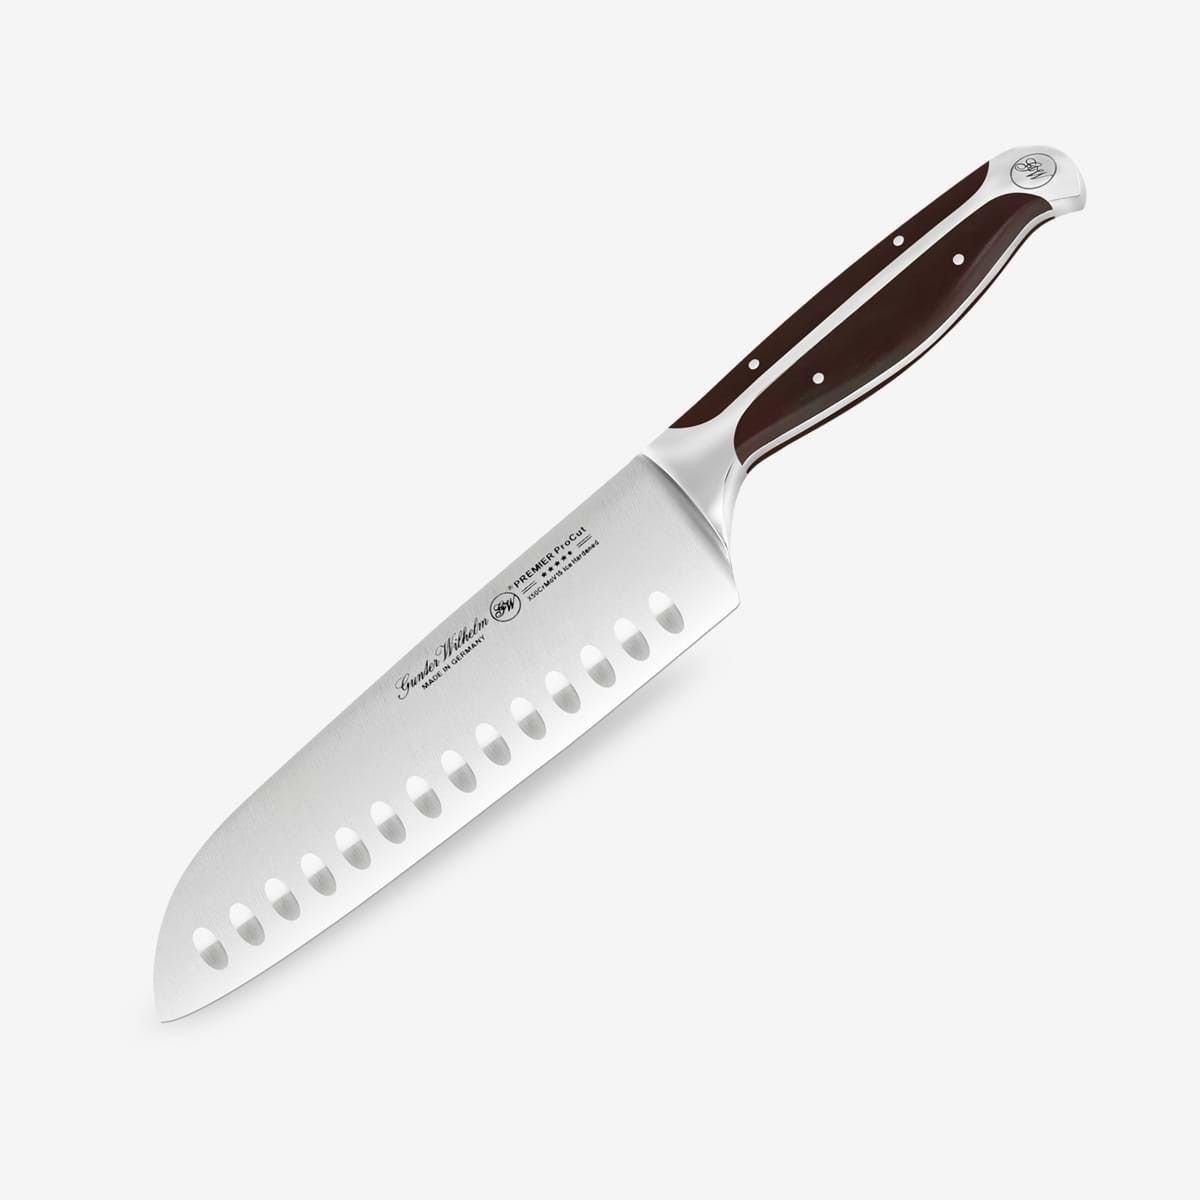 Gunter Wilhelm Thunder Santoku Knife, 7 Inch | Dark Brown ABS Handle SKU: 30-315-0407